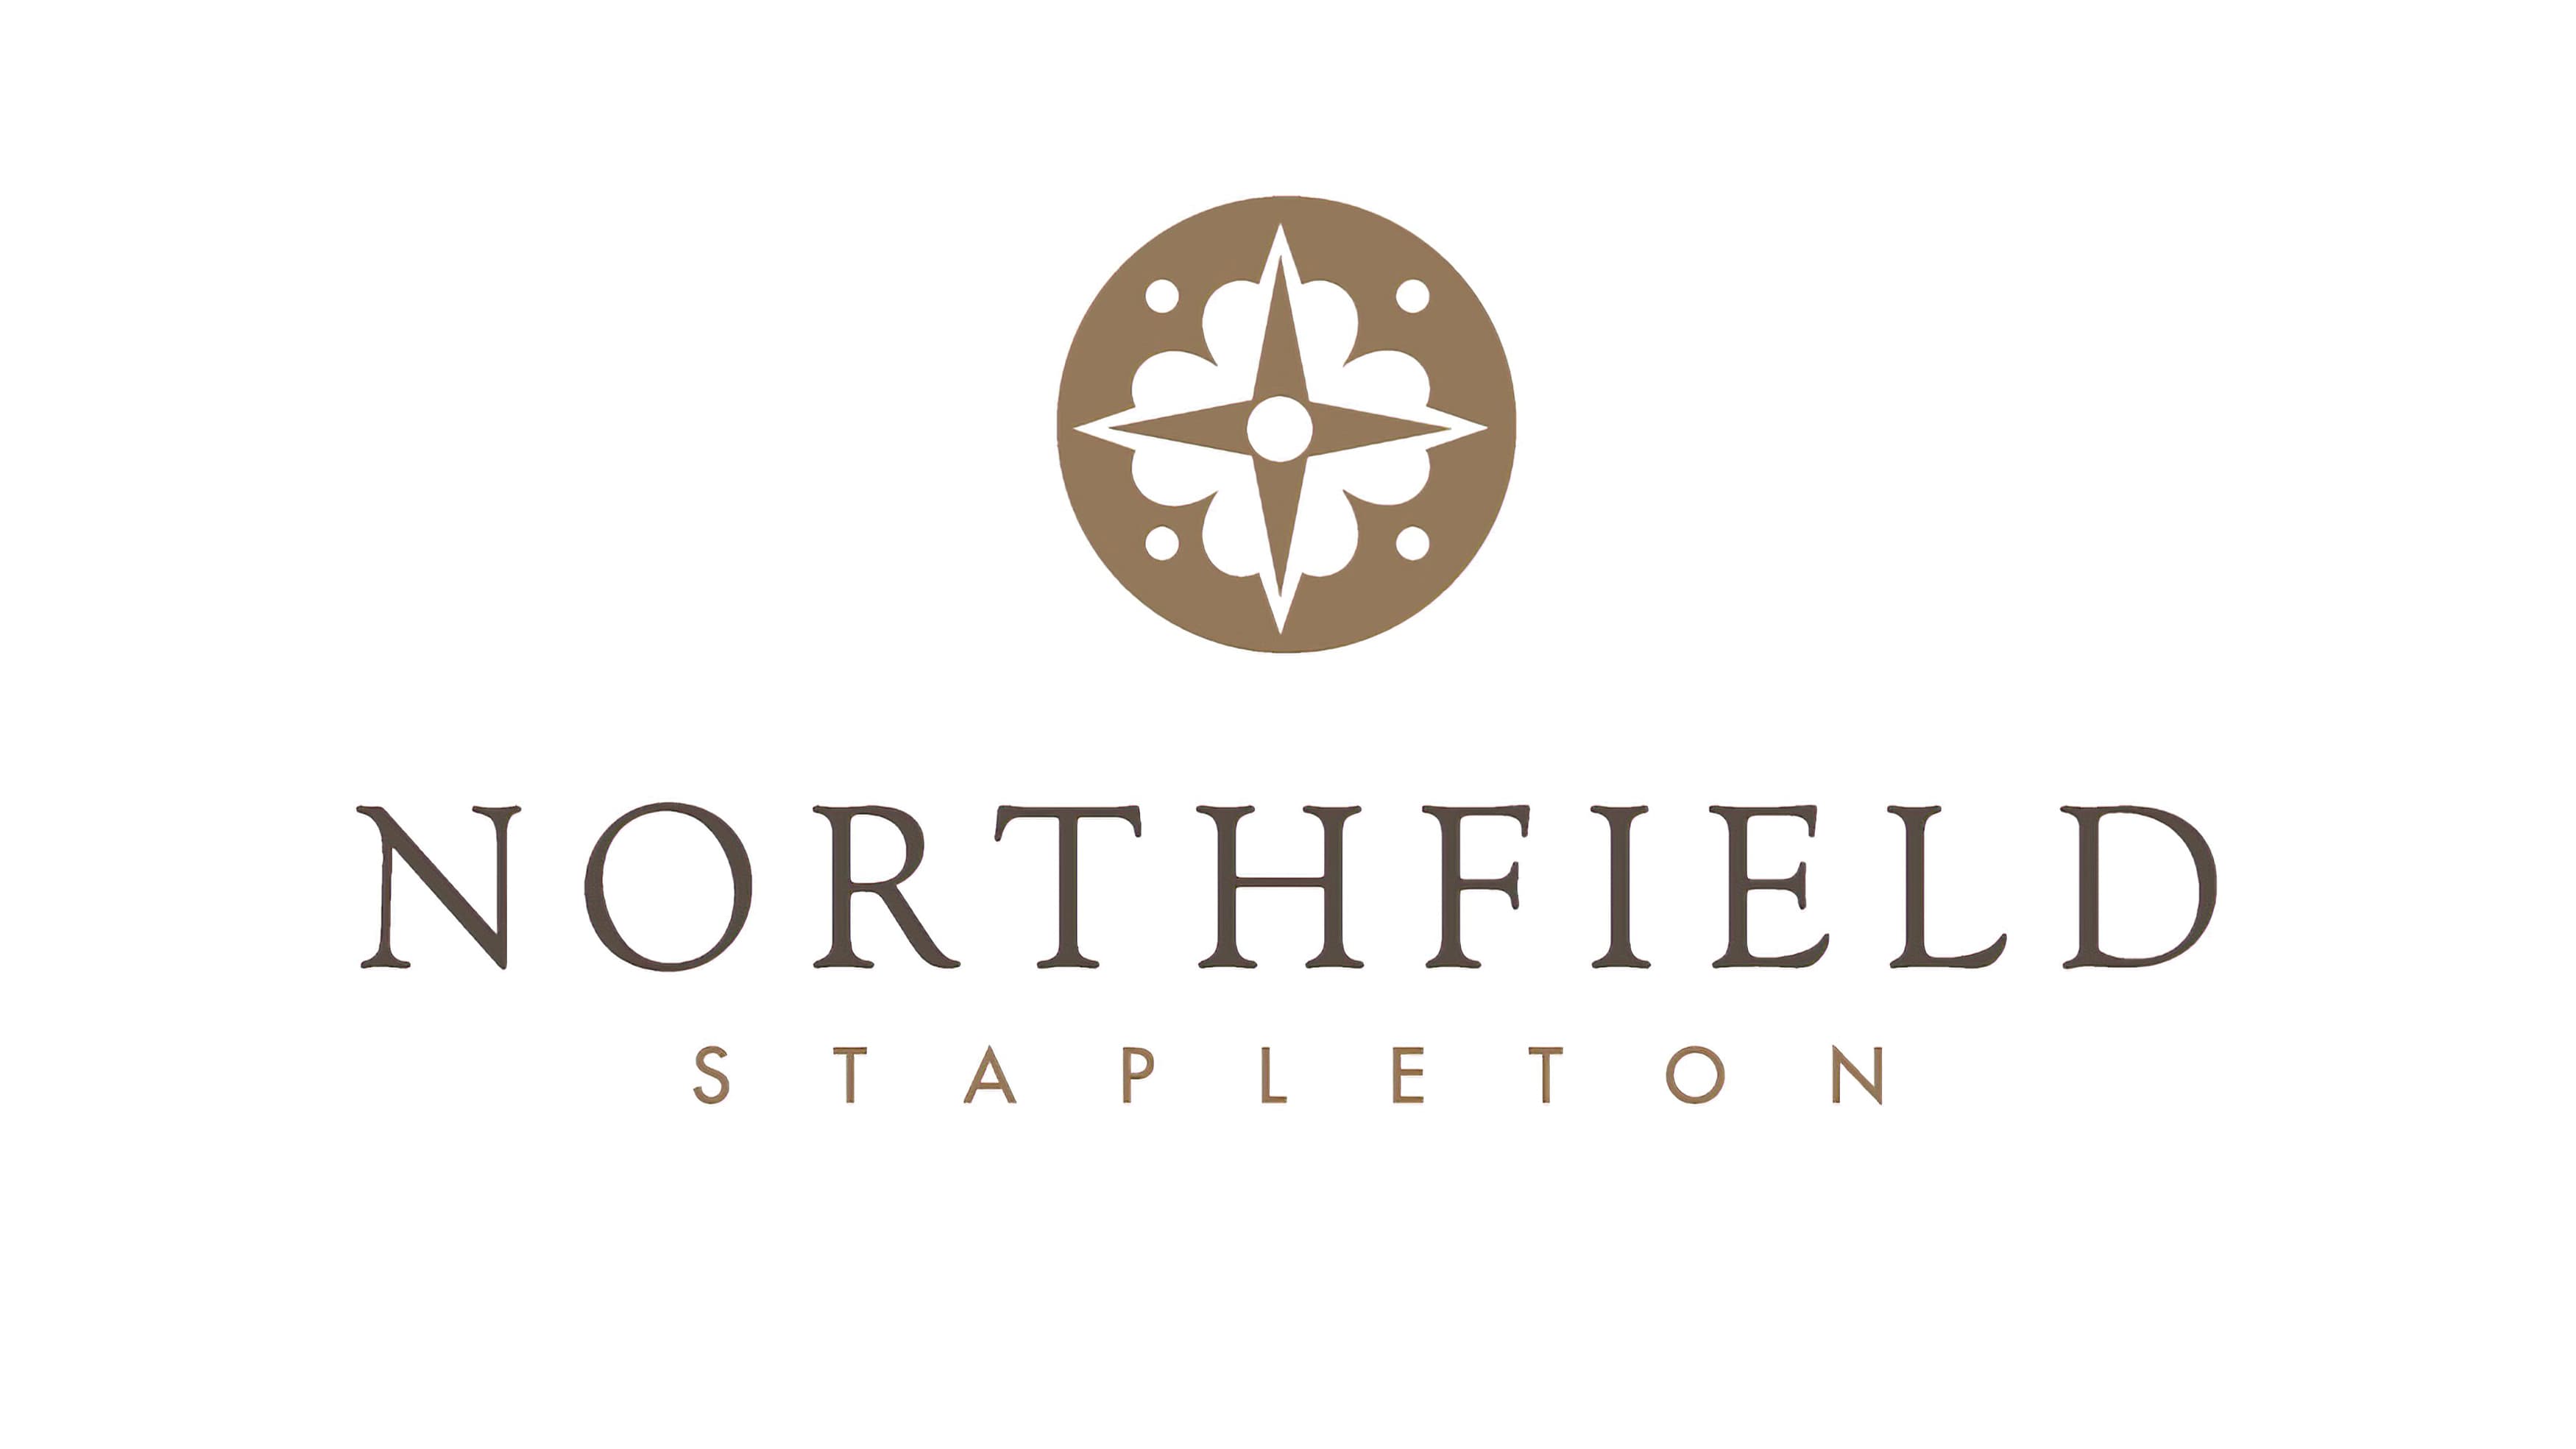 Northfield Stapleton project logo designed by RSM Design